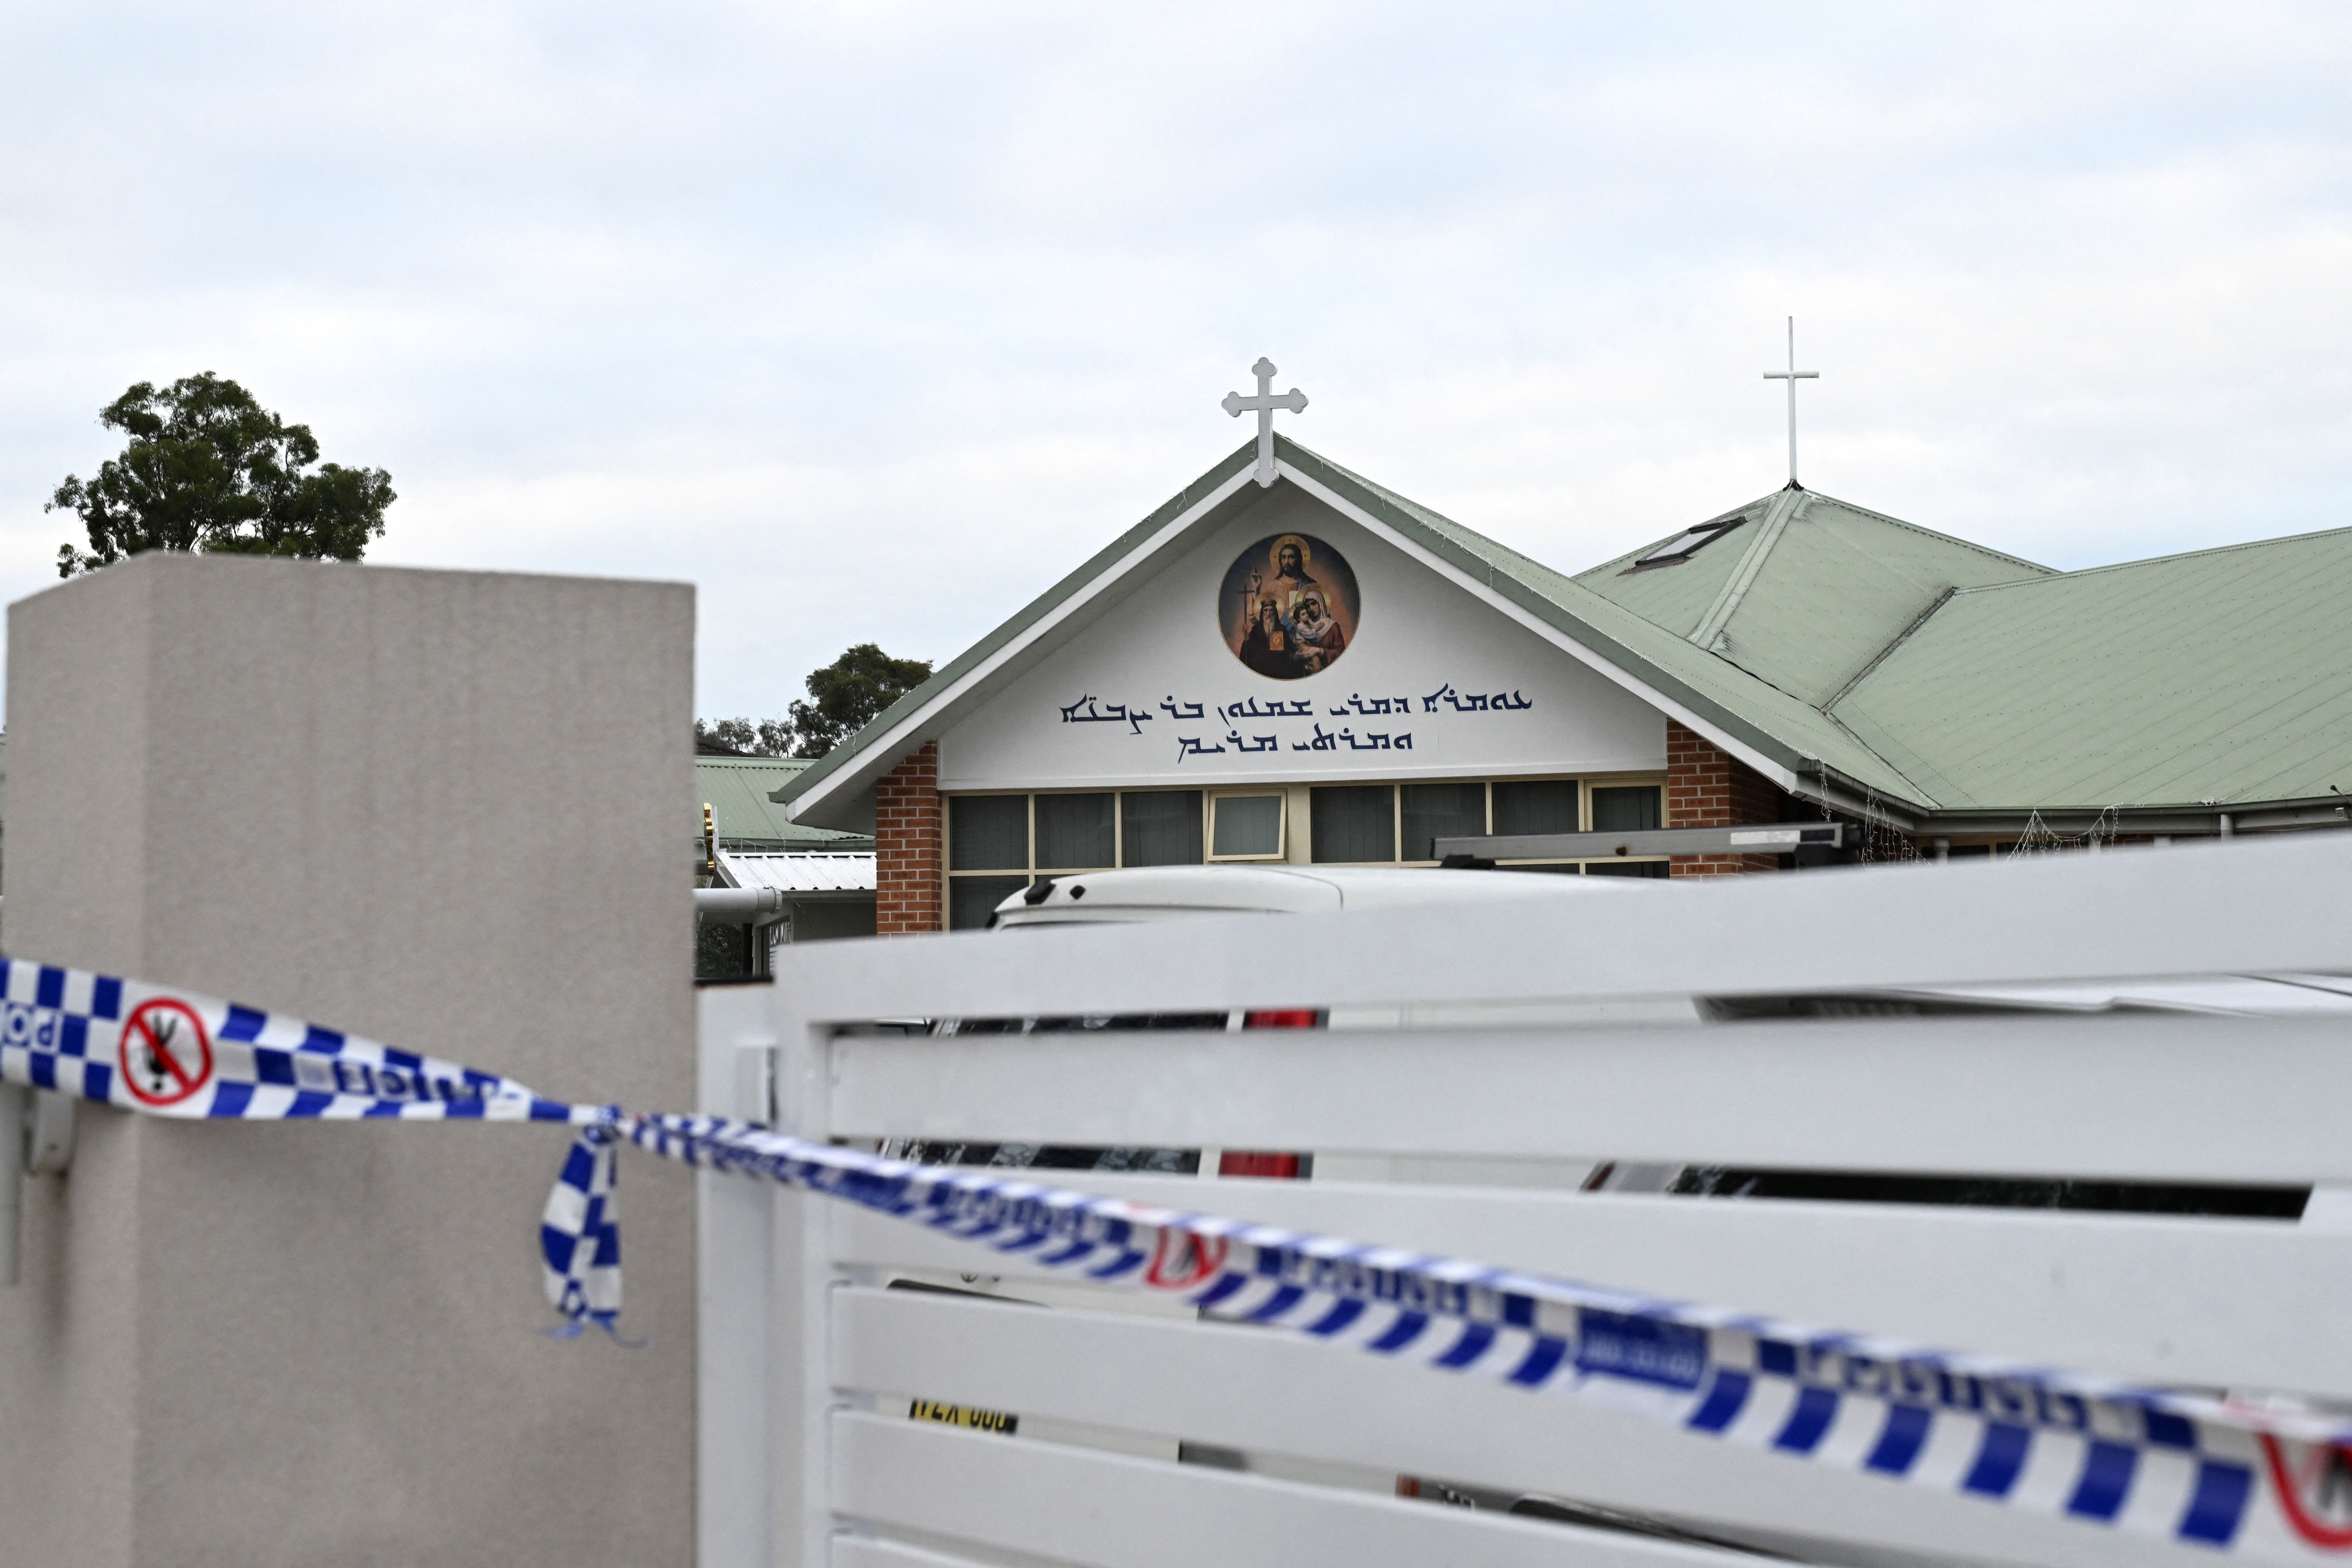 Sydney bishop stabbing: Seven teens arrests in counter-terrorism raids